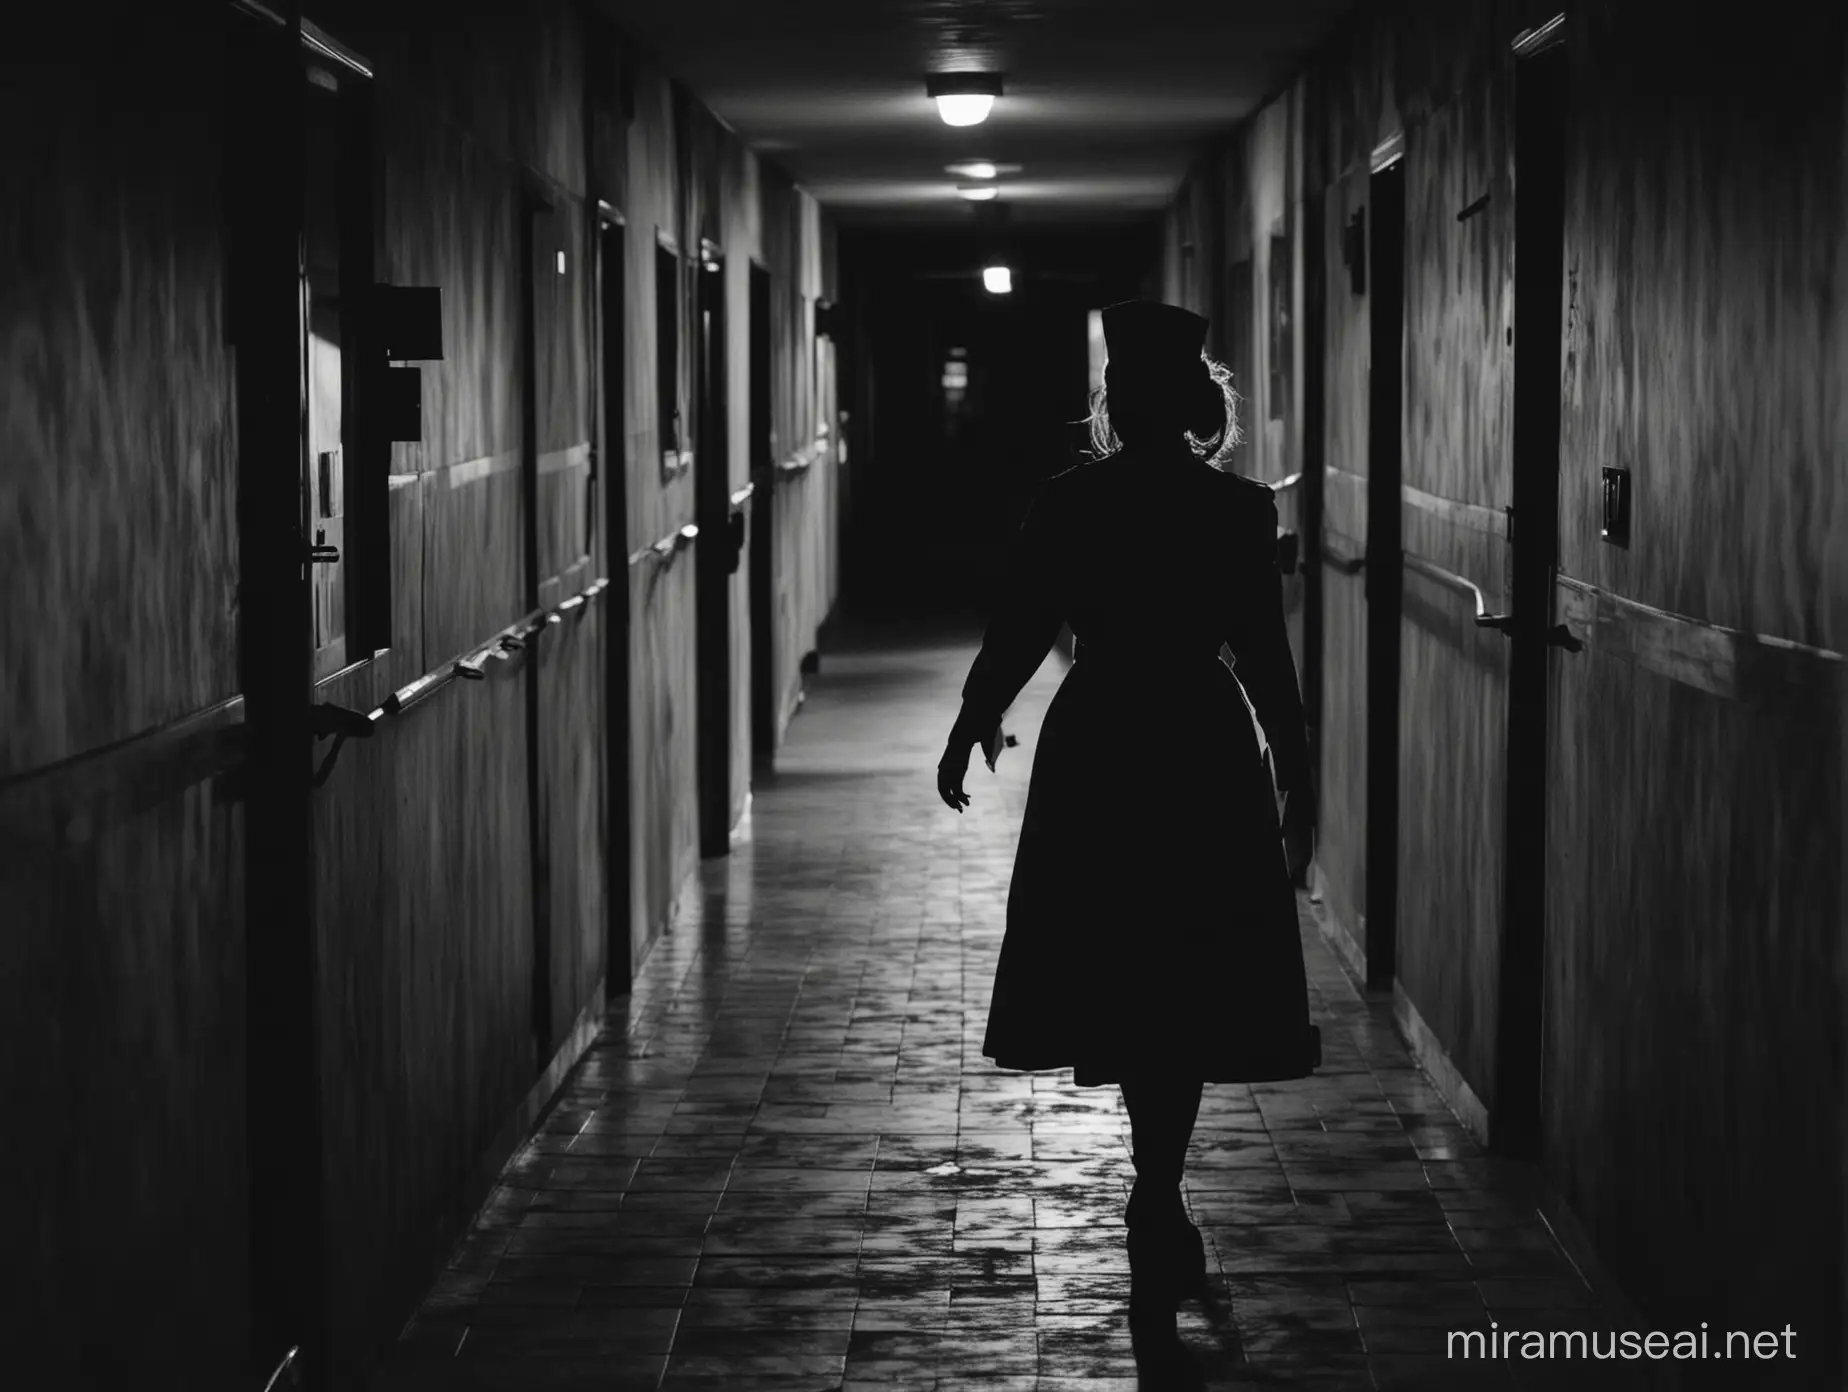 Nurse in Vintage Uniform in Dimly Lit Hospital Corridor at Night